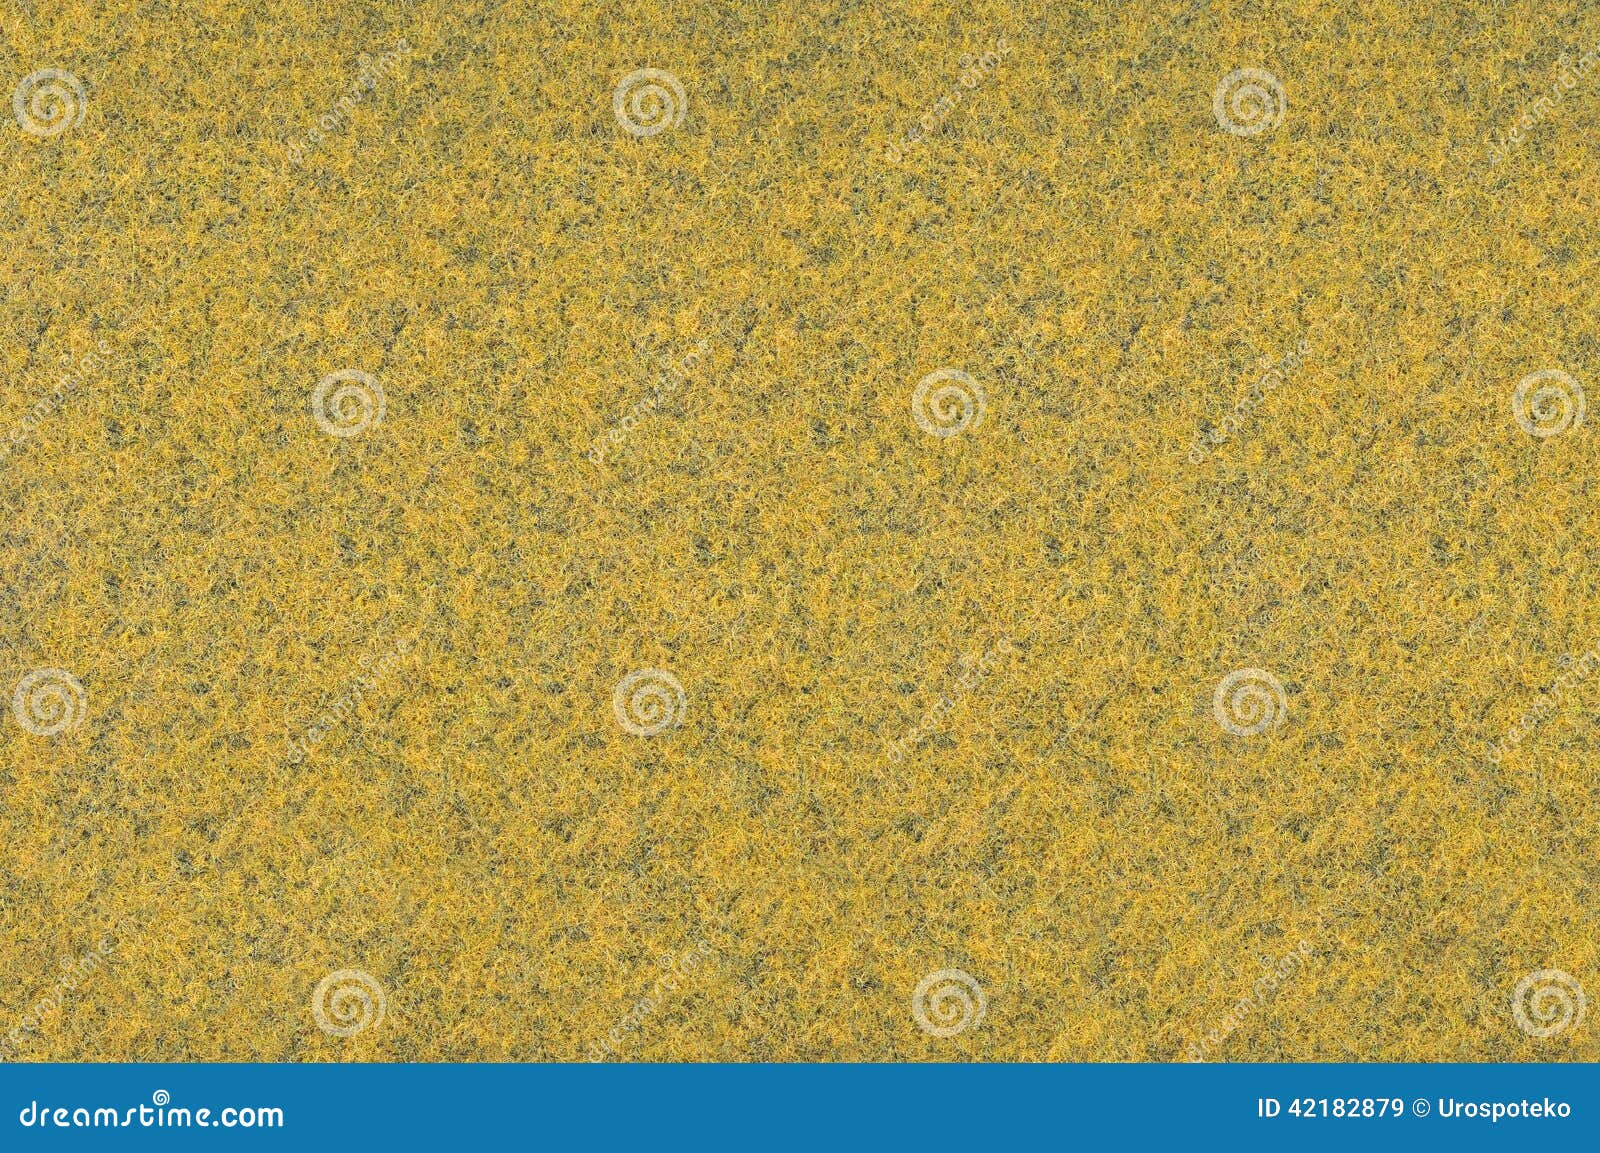 Yellow Carpet Texture Seamless